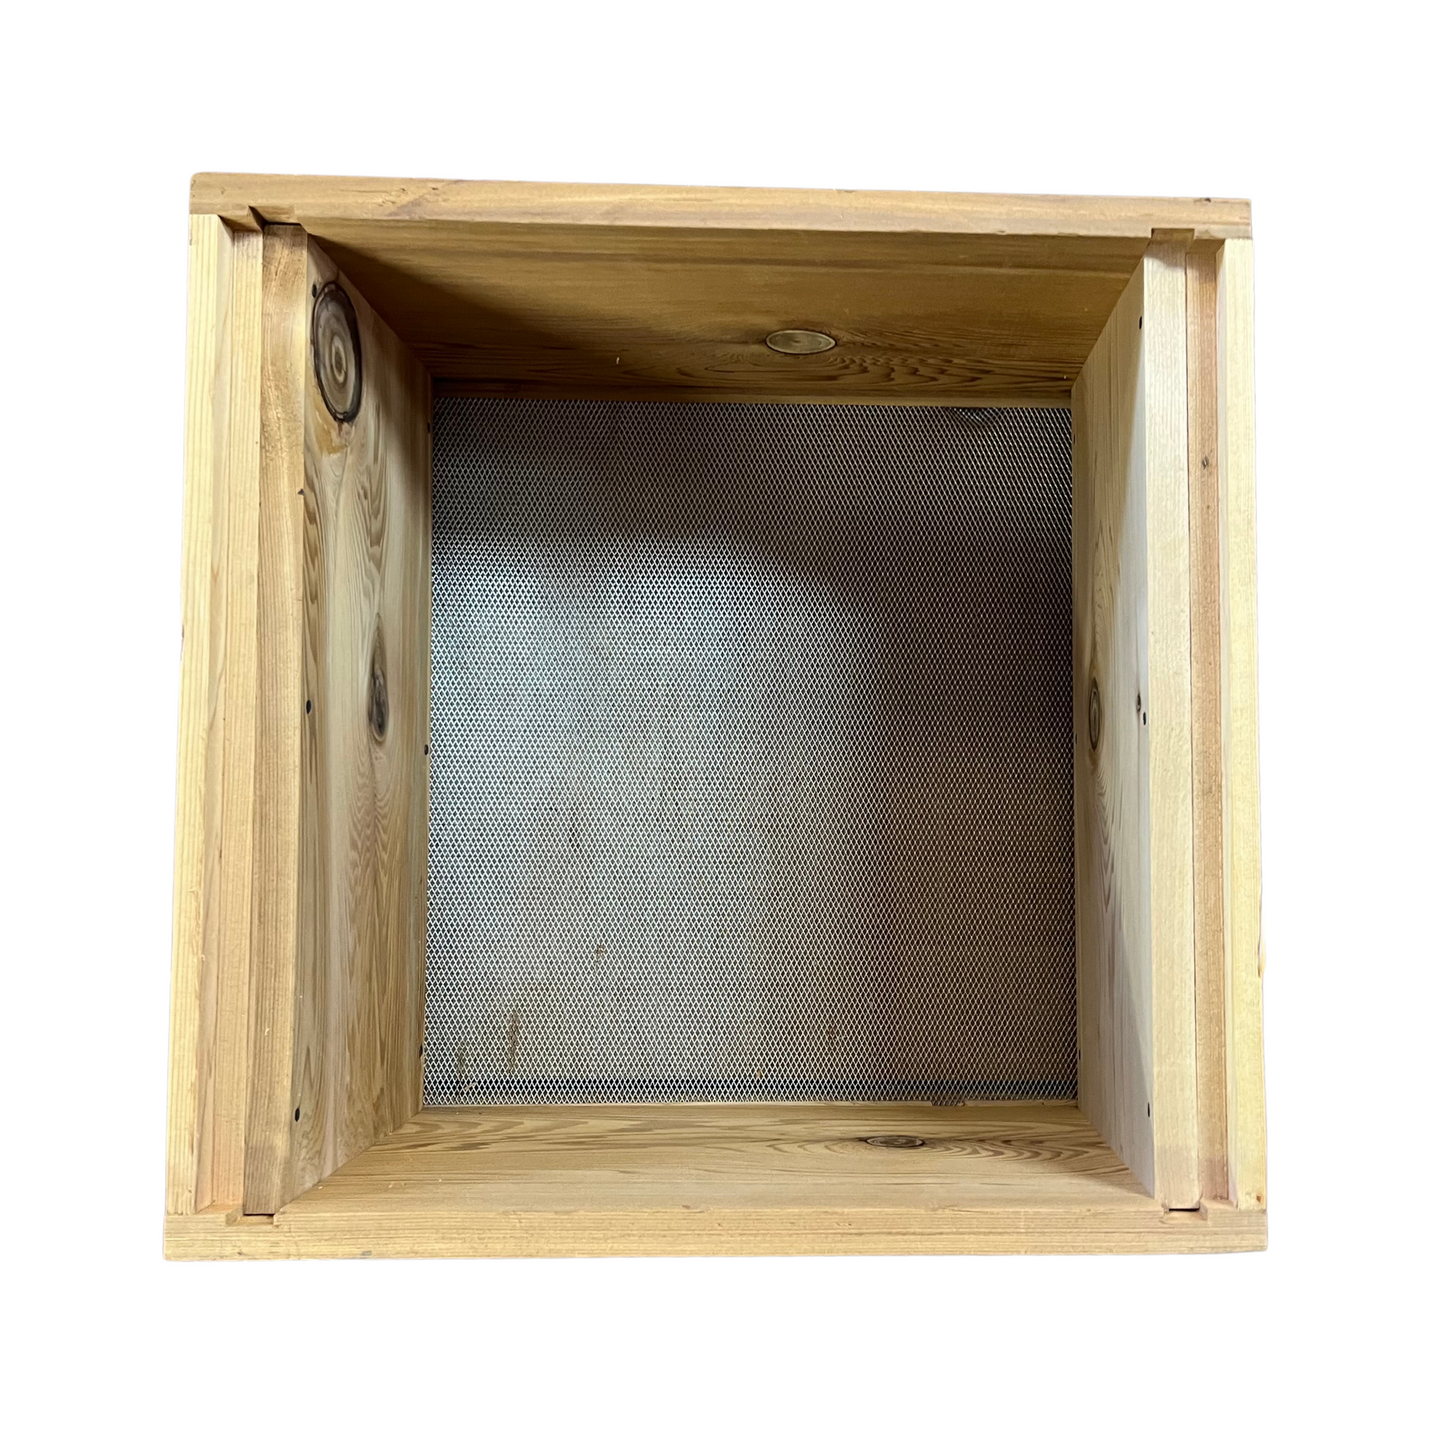 BARGAIN BASEMENT National Cedar Brood Box with Floor Assembled, 2nd Grade